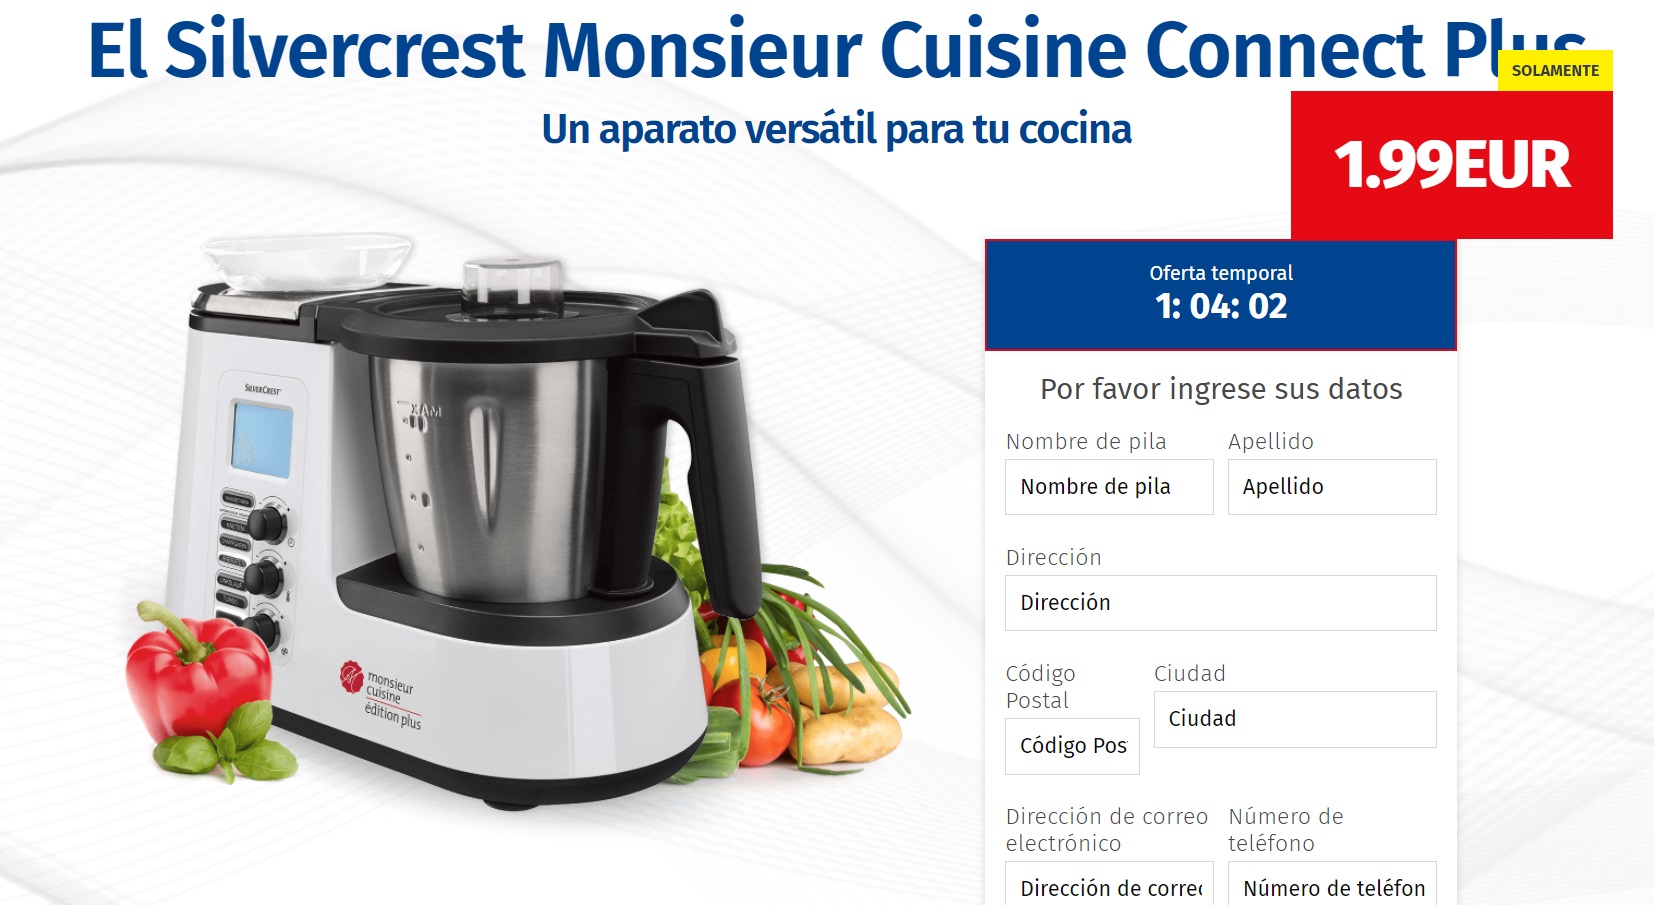 11 razones para comprar el Monsieur Cuisine Connect de Lidl